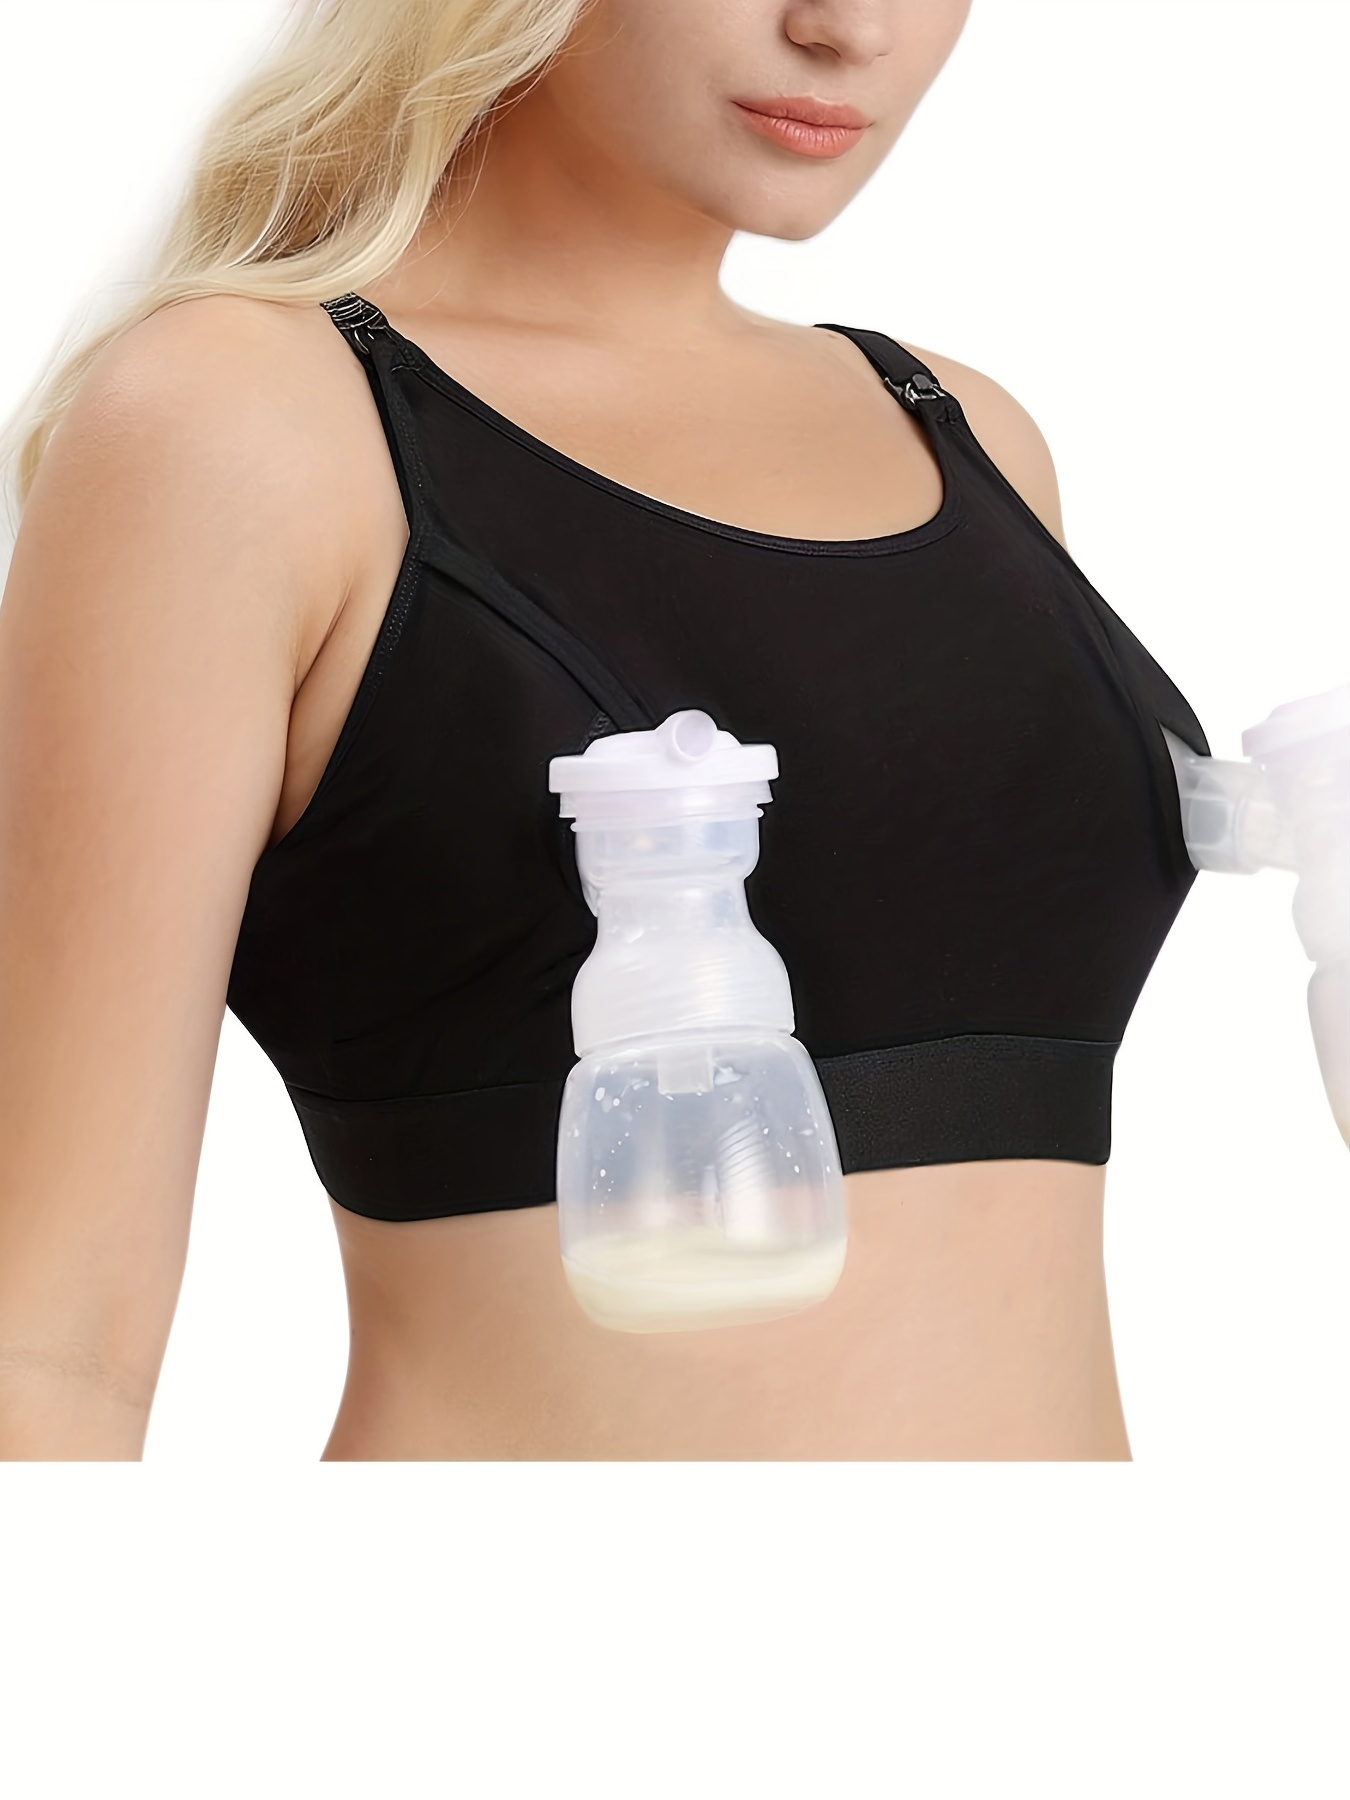 Hands-Free Pumping Bra and Nursing Bra, Adjustable Breastfeeding